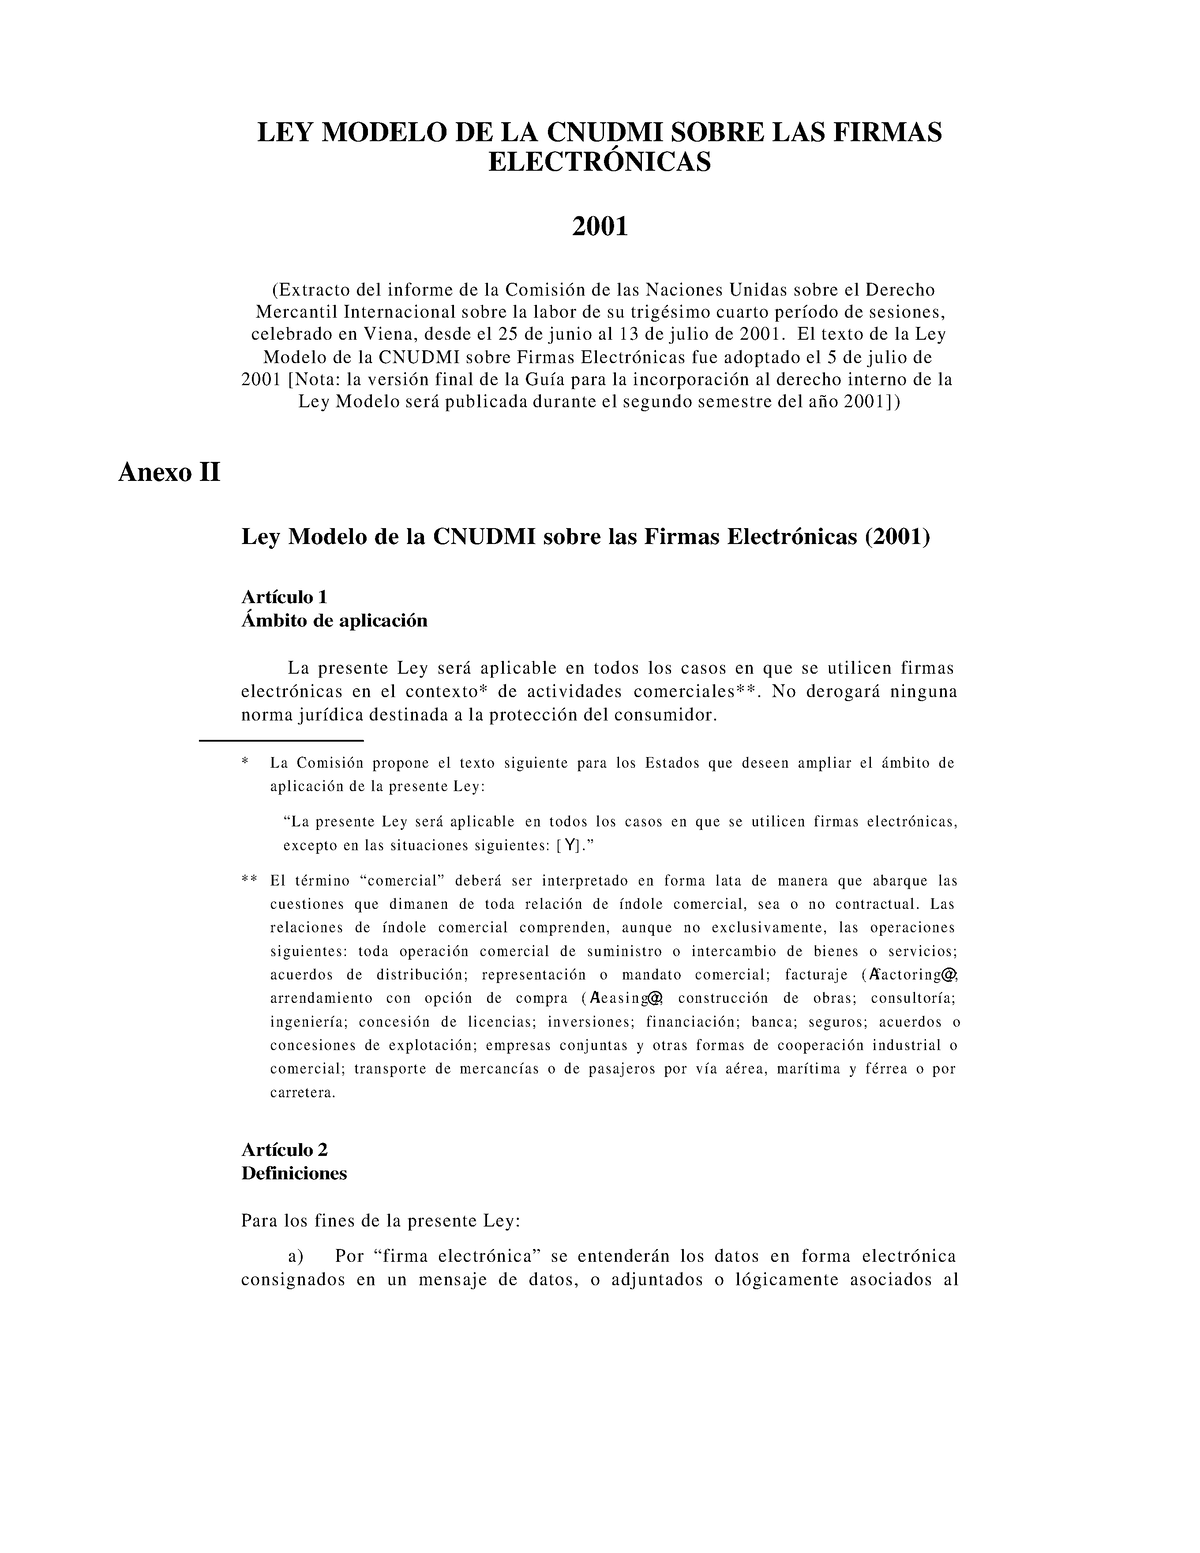 Cnudmi Firmas Electronicas - LEY MODELO DE LA CNUDMI SOBRE LAS FIRMAS  ELECTRÓNICAS 2001 (Extracto - Studocu